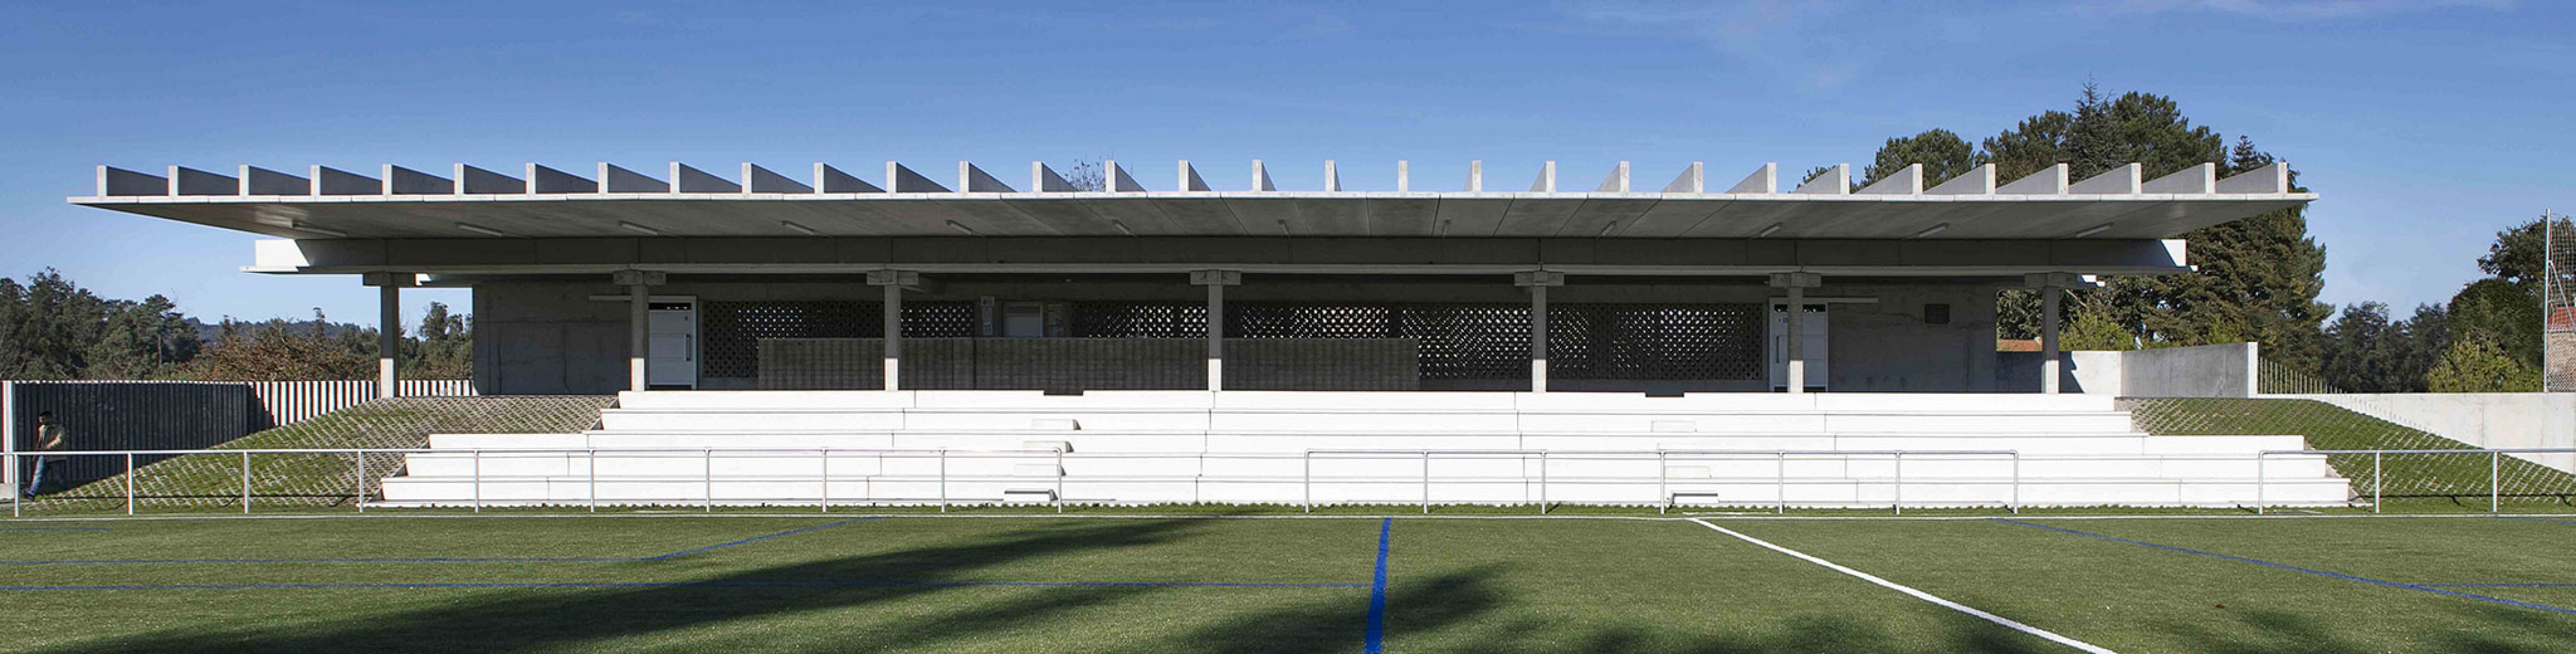 A Gandareira football field by Abraham Castro and Carlos Pita. Photograph courtesy of the authors.